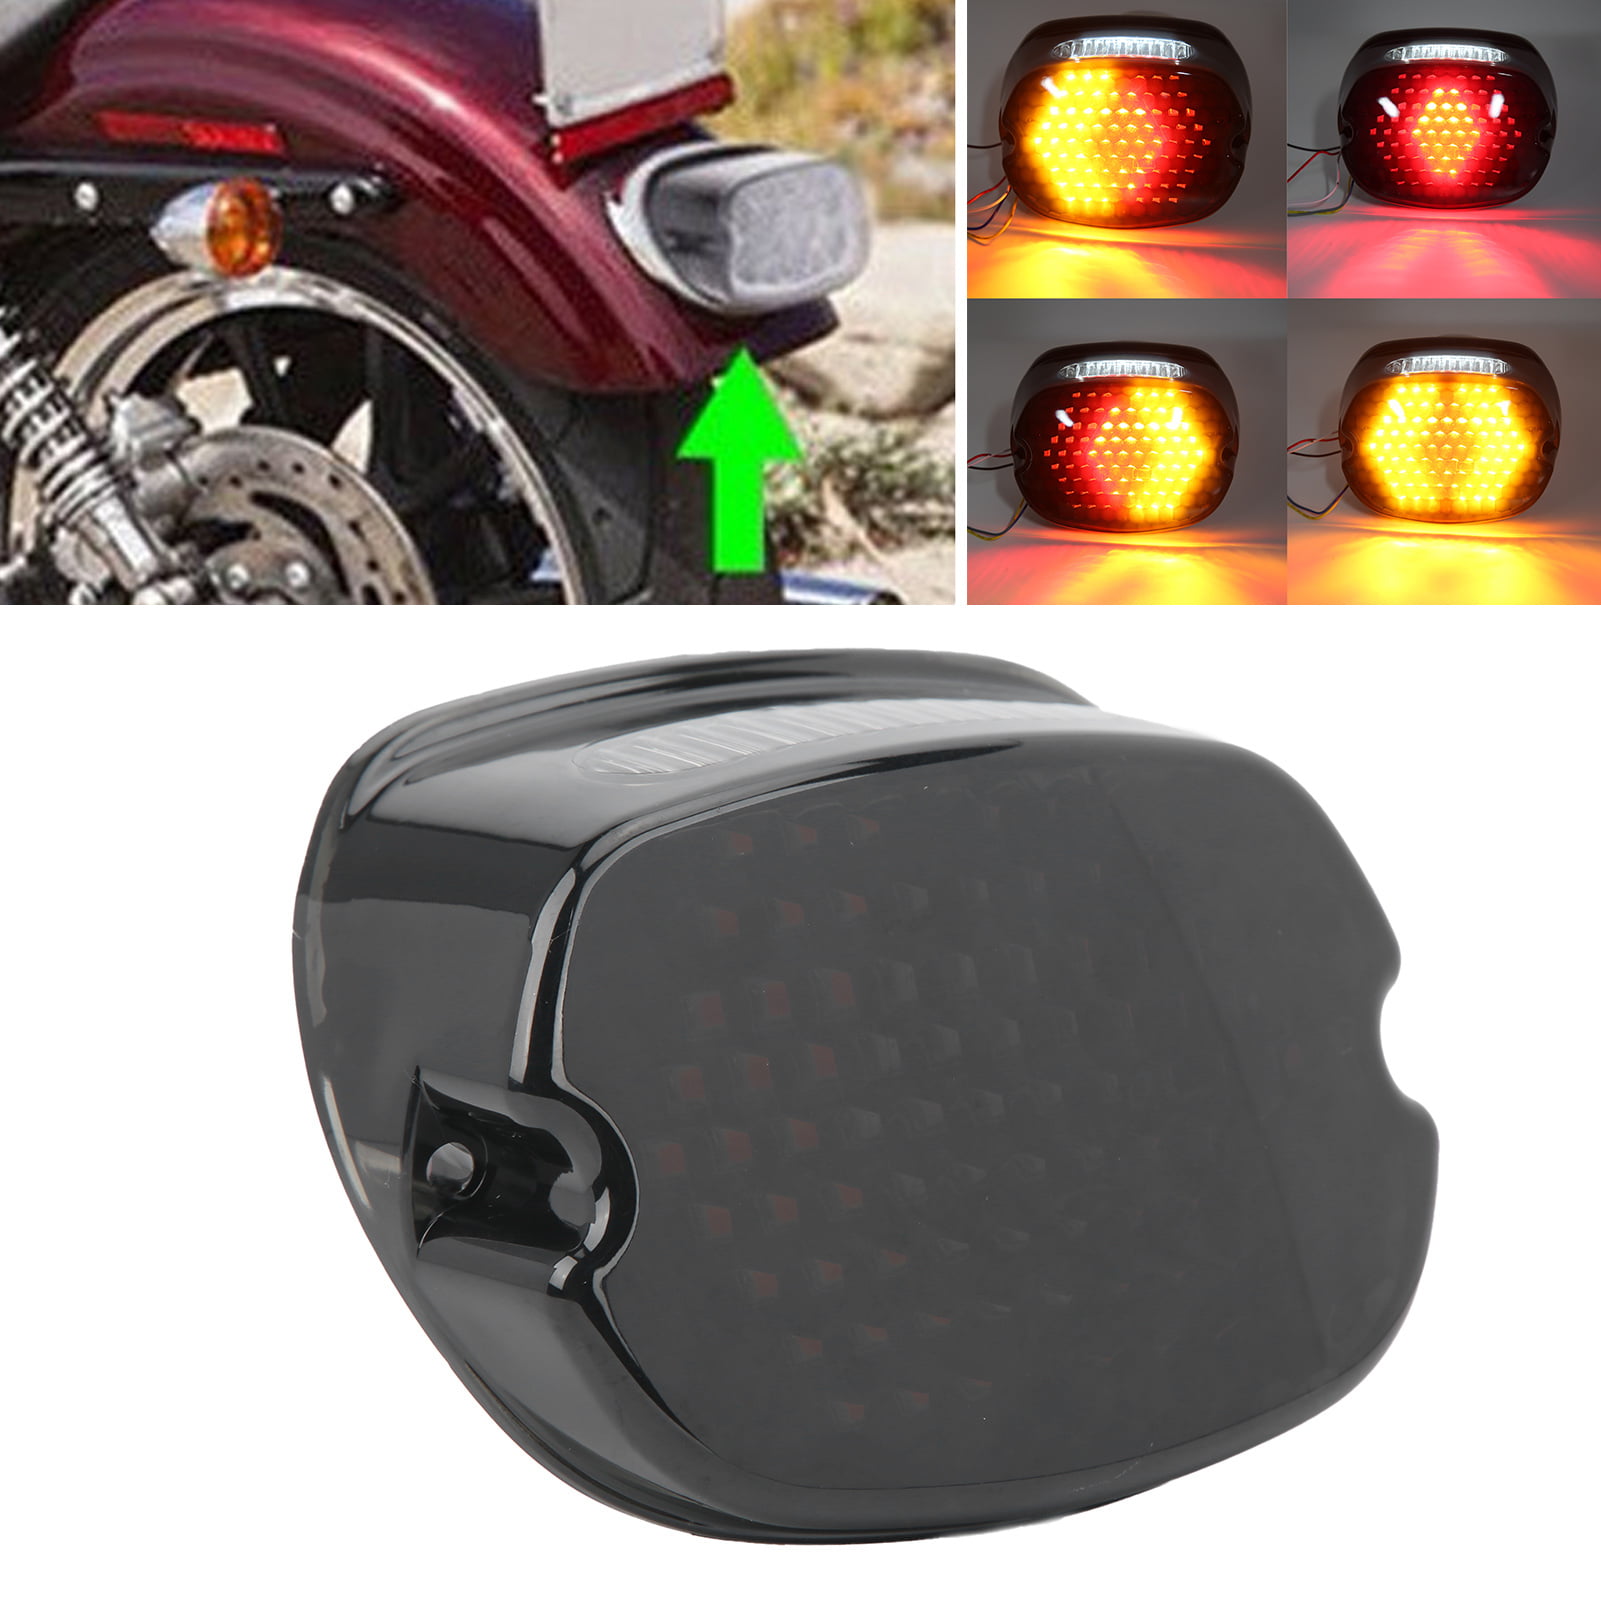 1x 12V Custom Motorcycle Taillight Brake Lamp License Plate Light Universal Fits 